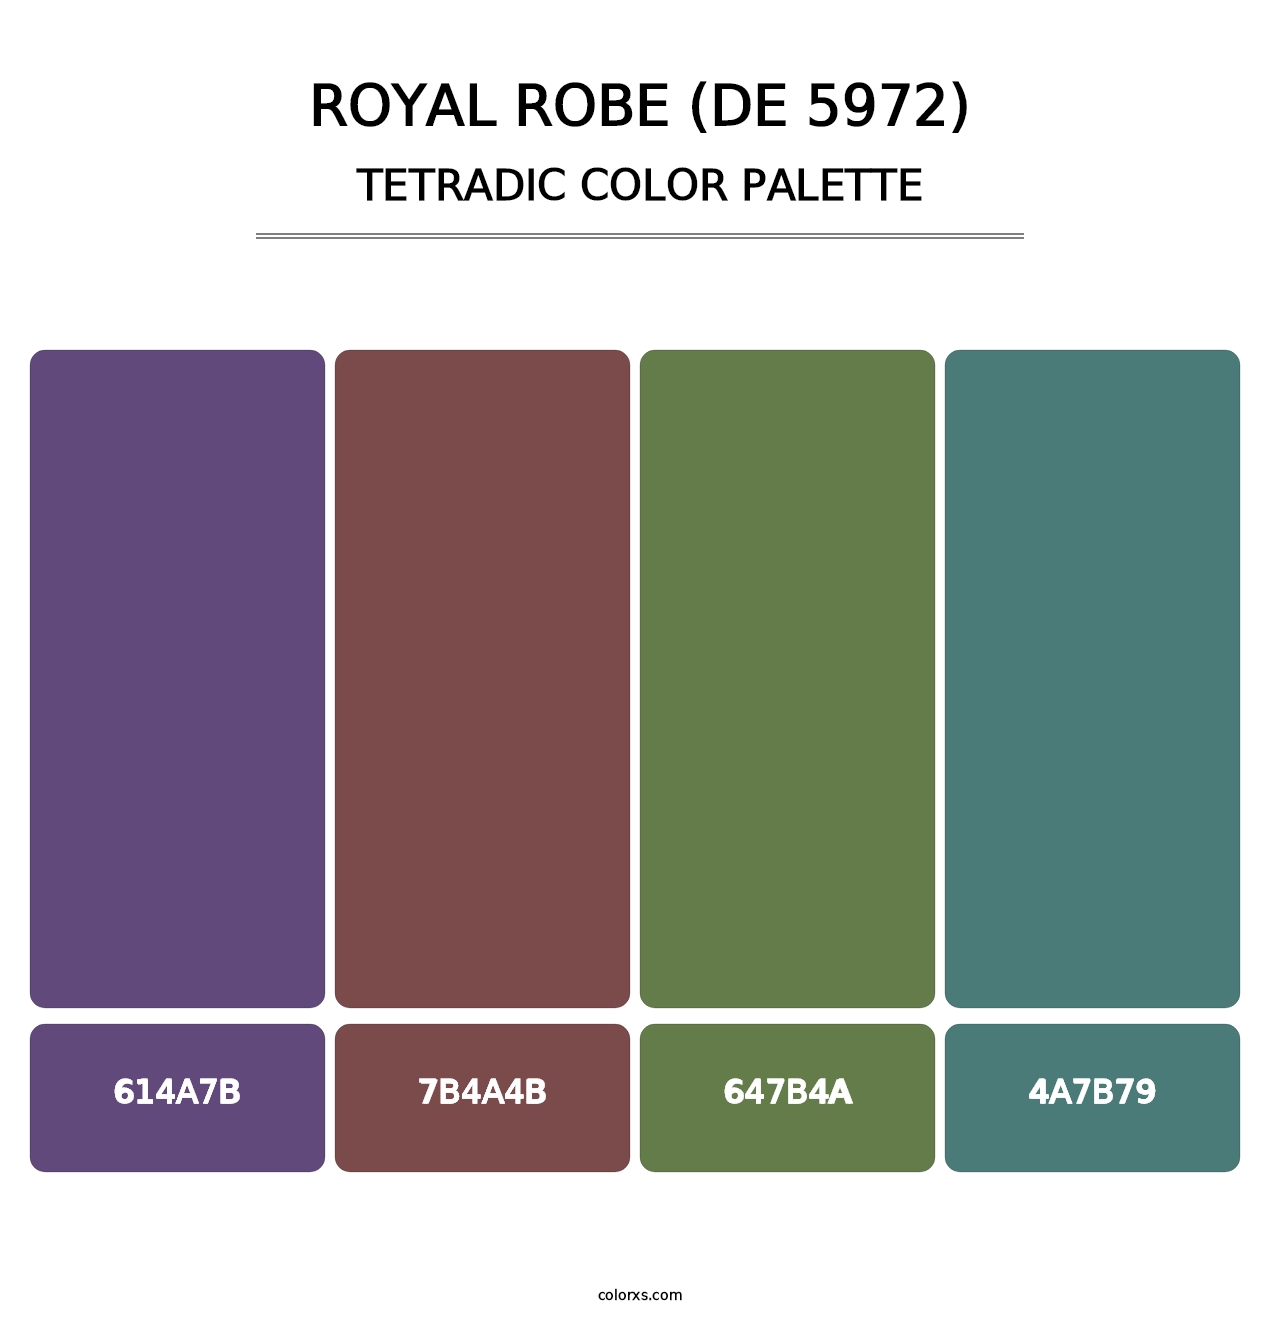 Royal Robe (DE 5972) - Tetradic Color Palette